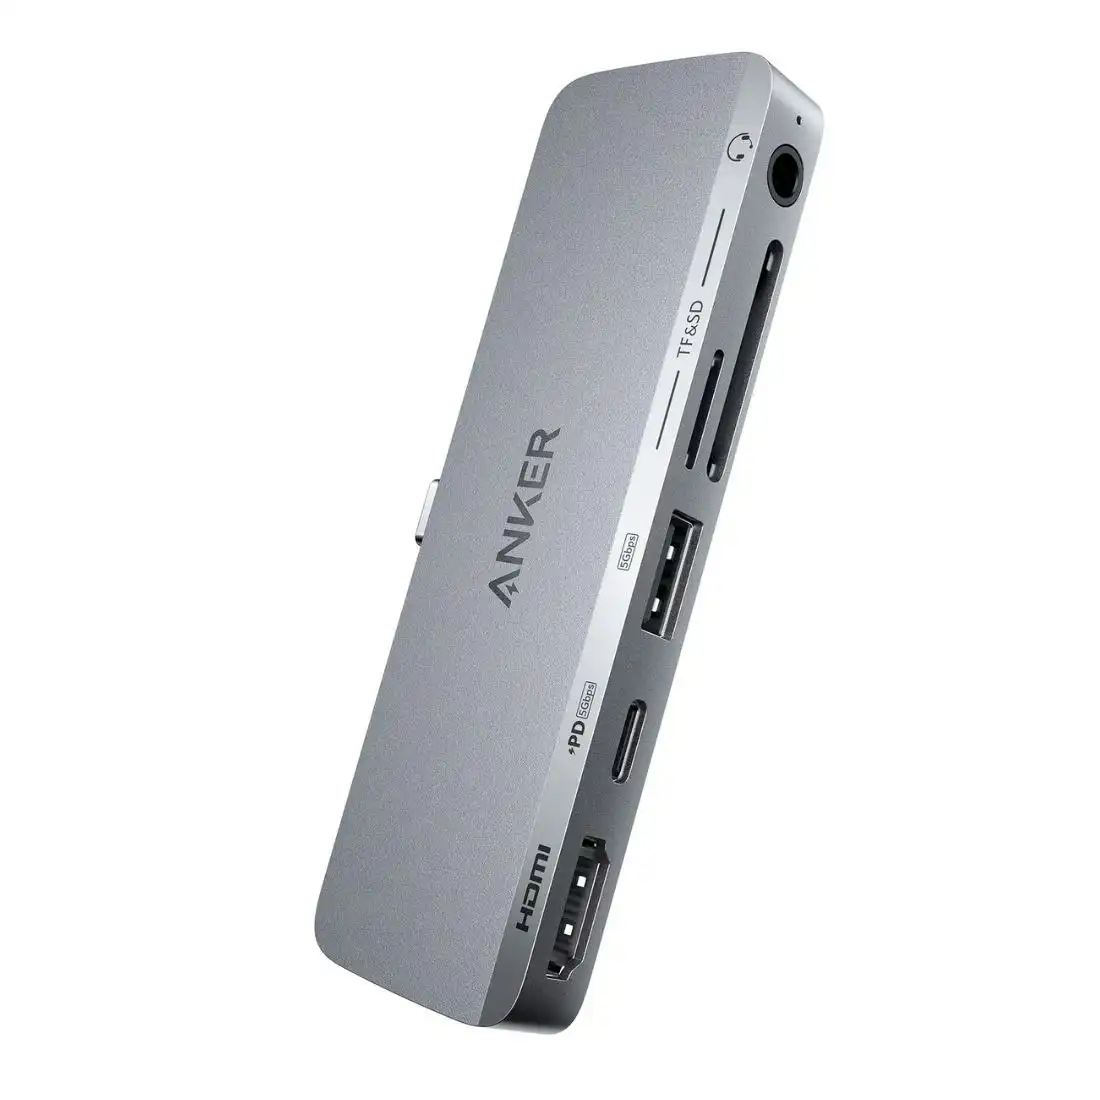 Anker 541 USB-C Hub (6-in-1, for iPad) - Grey